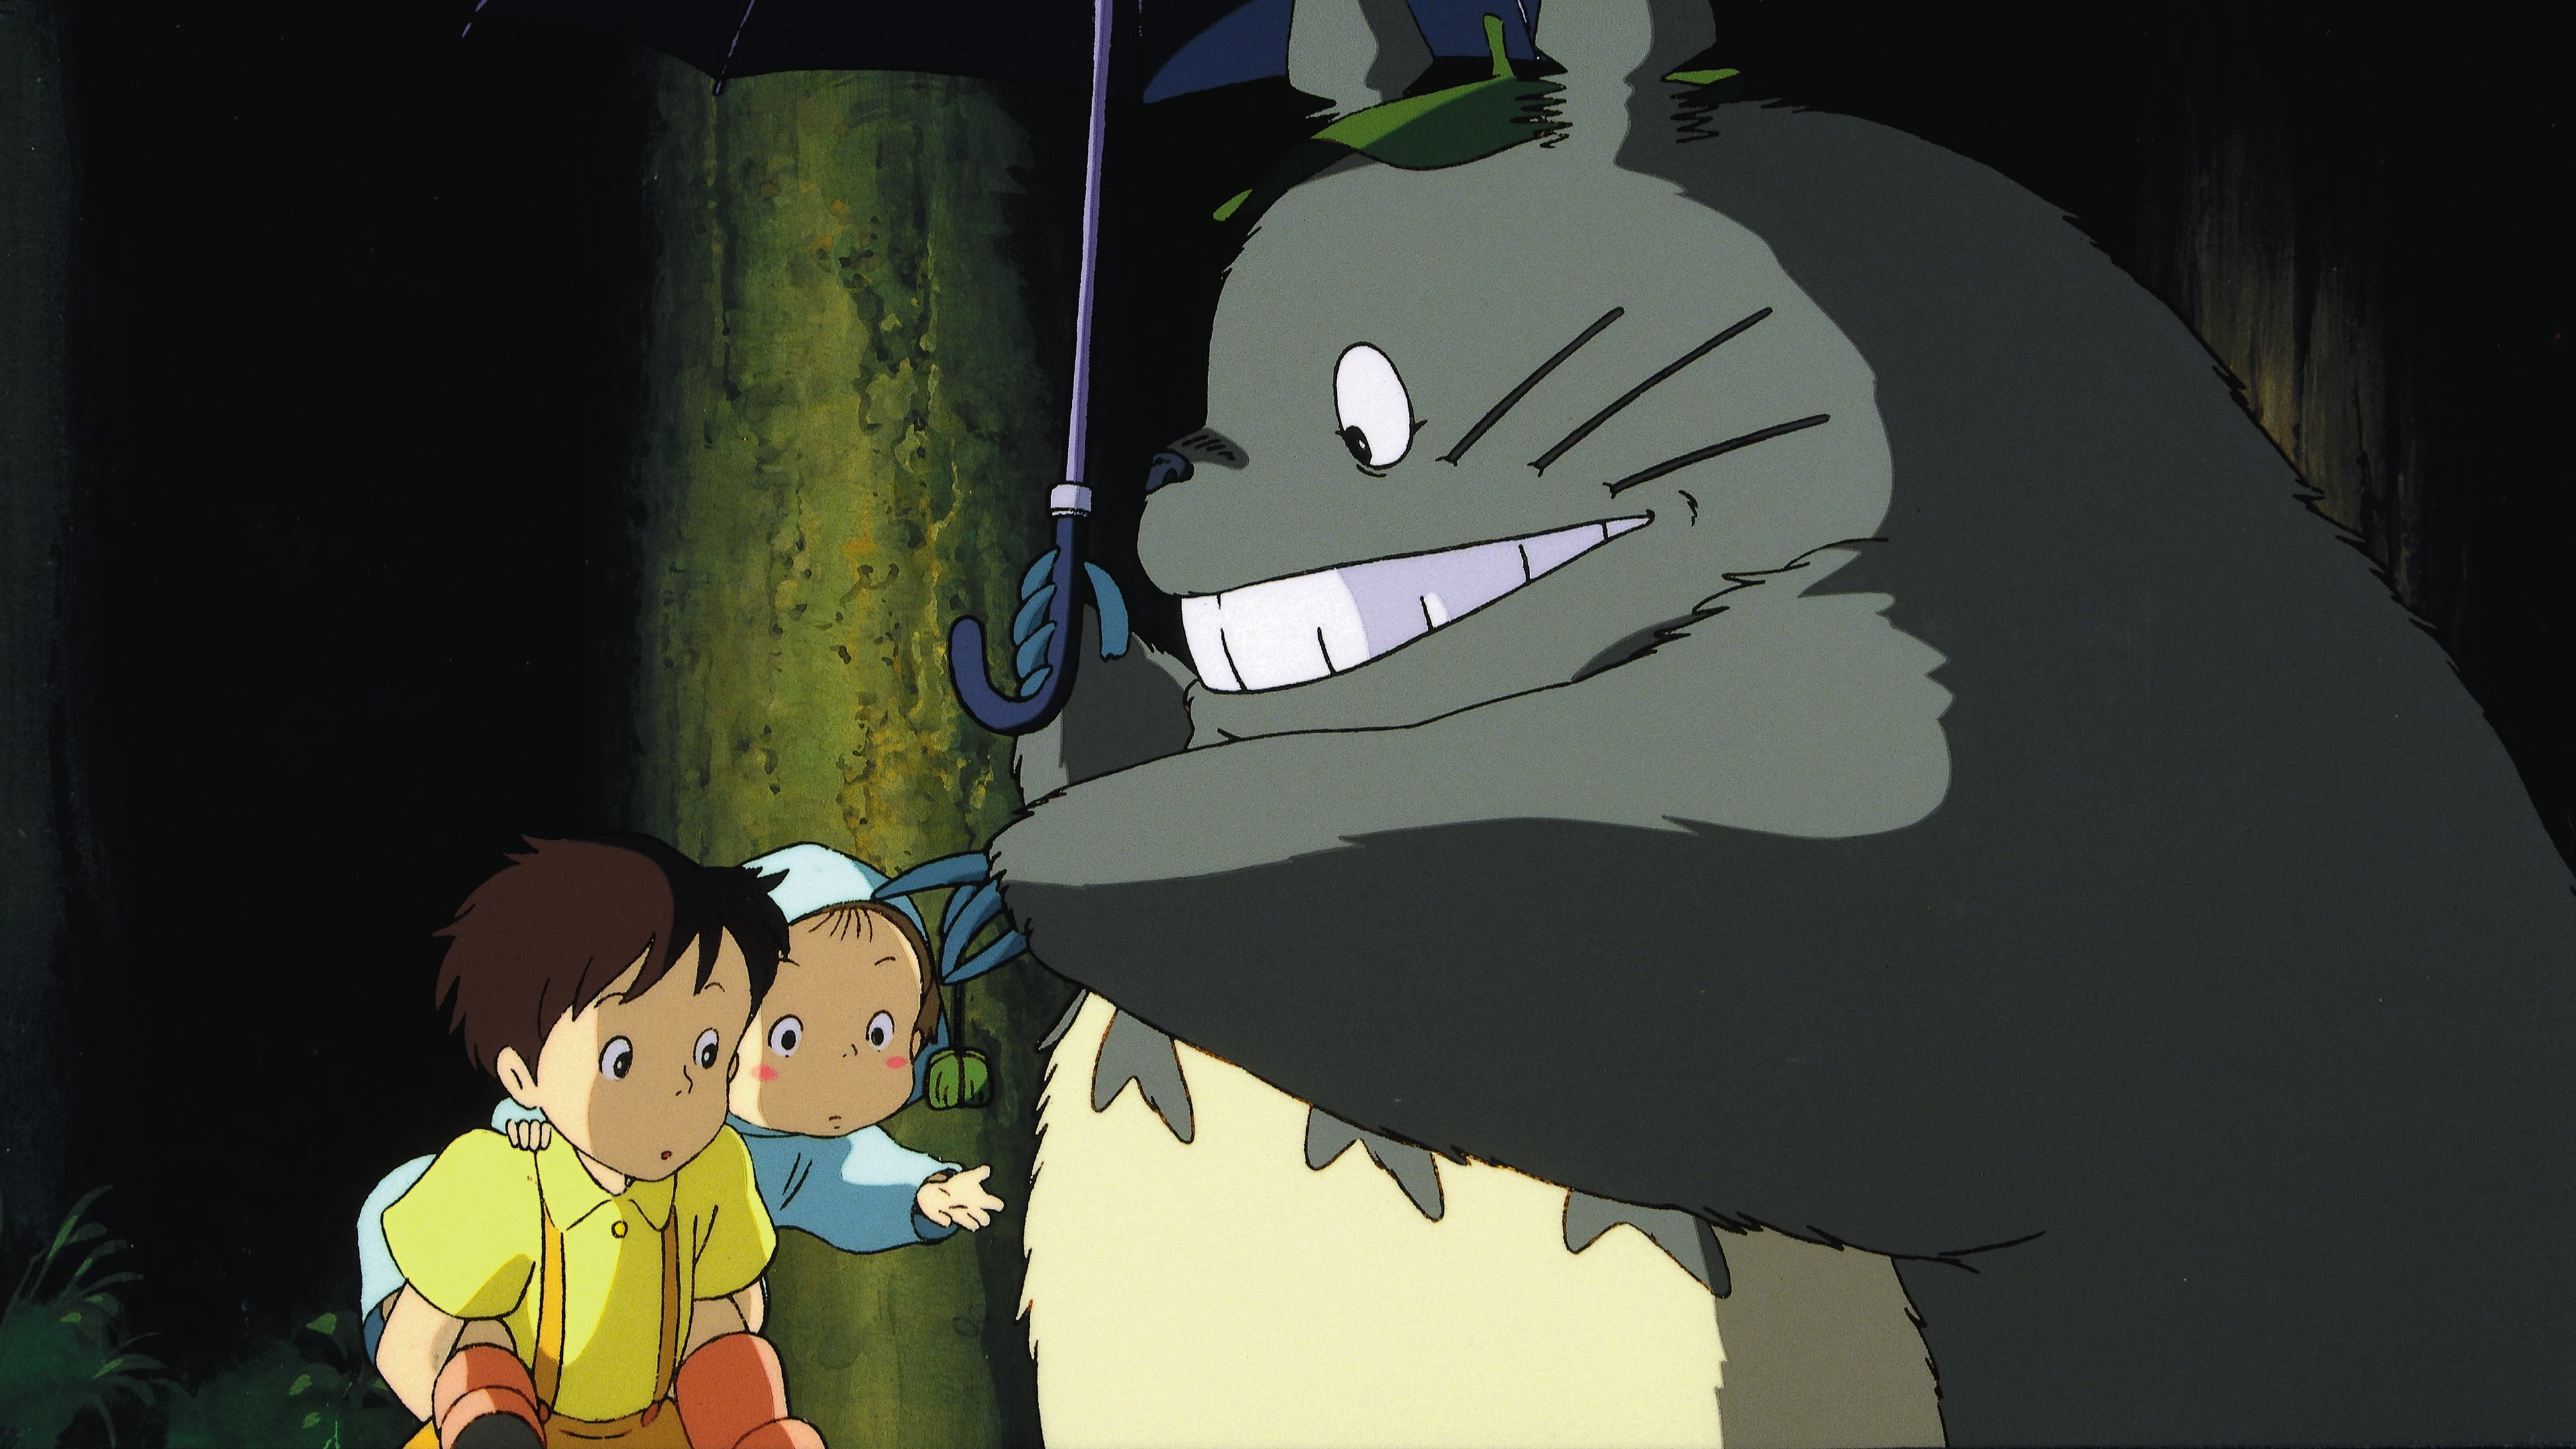 Image du film Mon voisin Totoro 5azjlq8rbaho0n69gdjdudfrcmcjpg